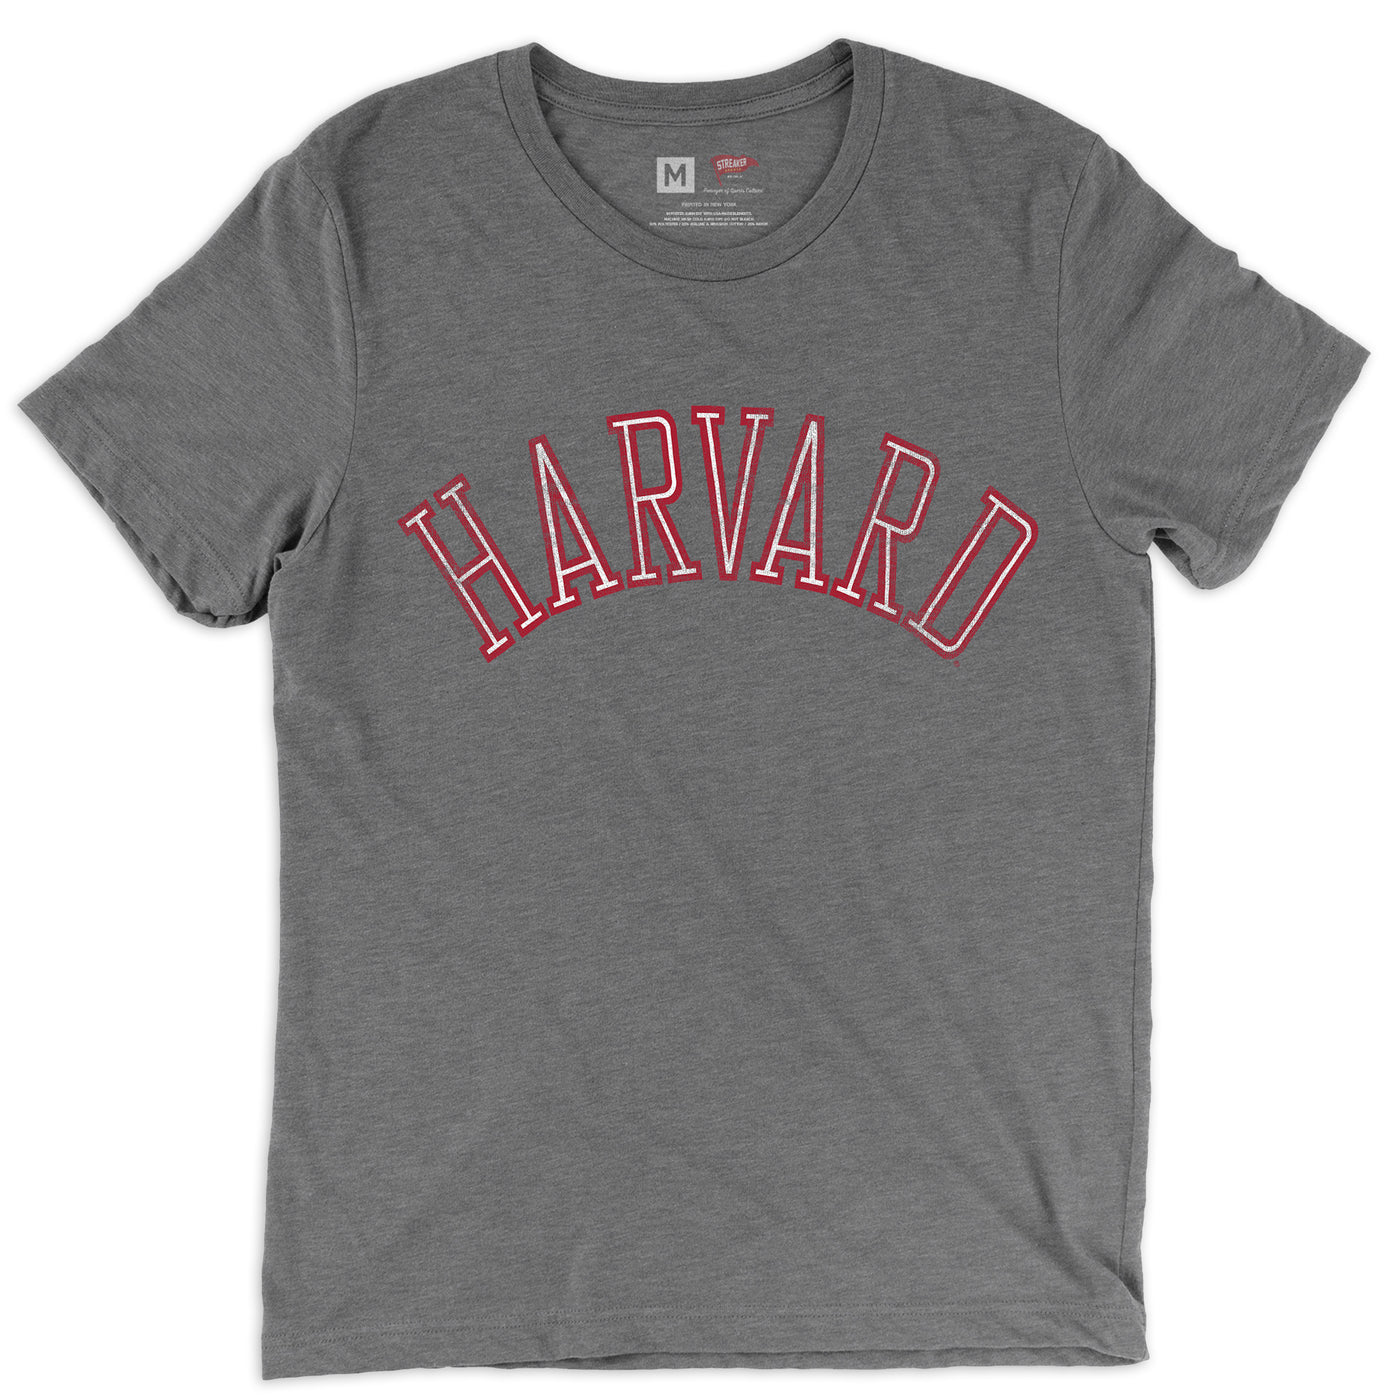 Harvard Vintage Standard Issue Tee - Streaker Sports